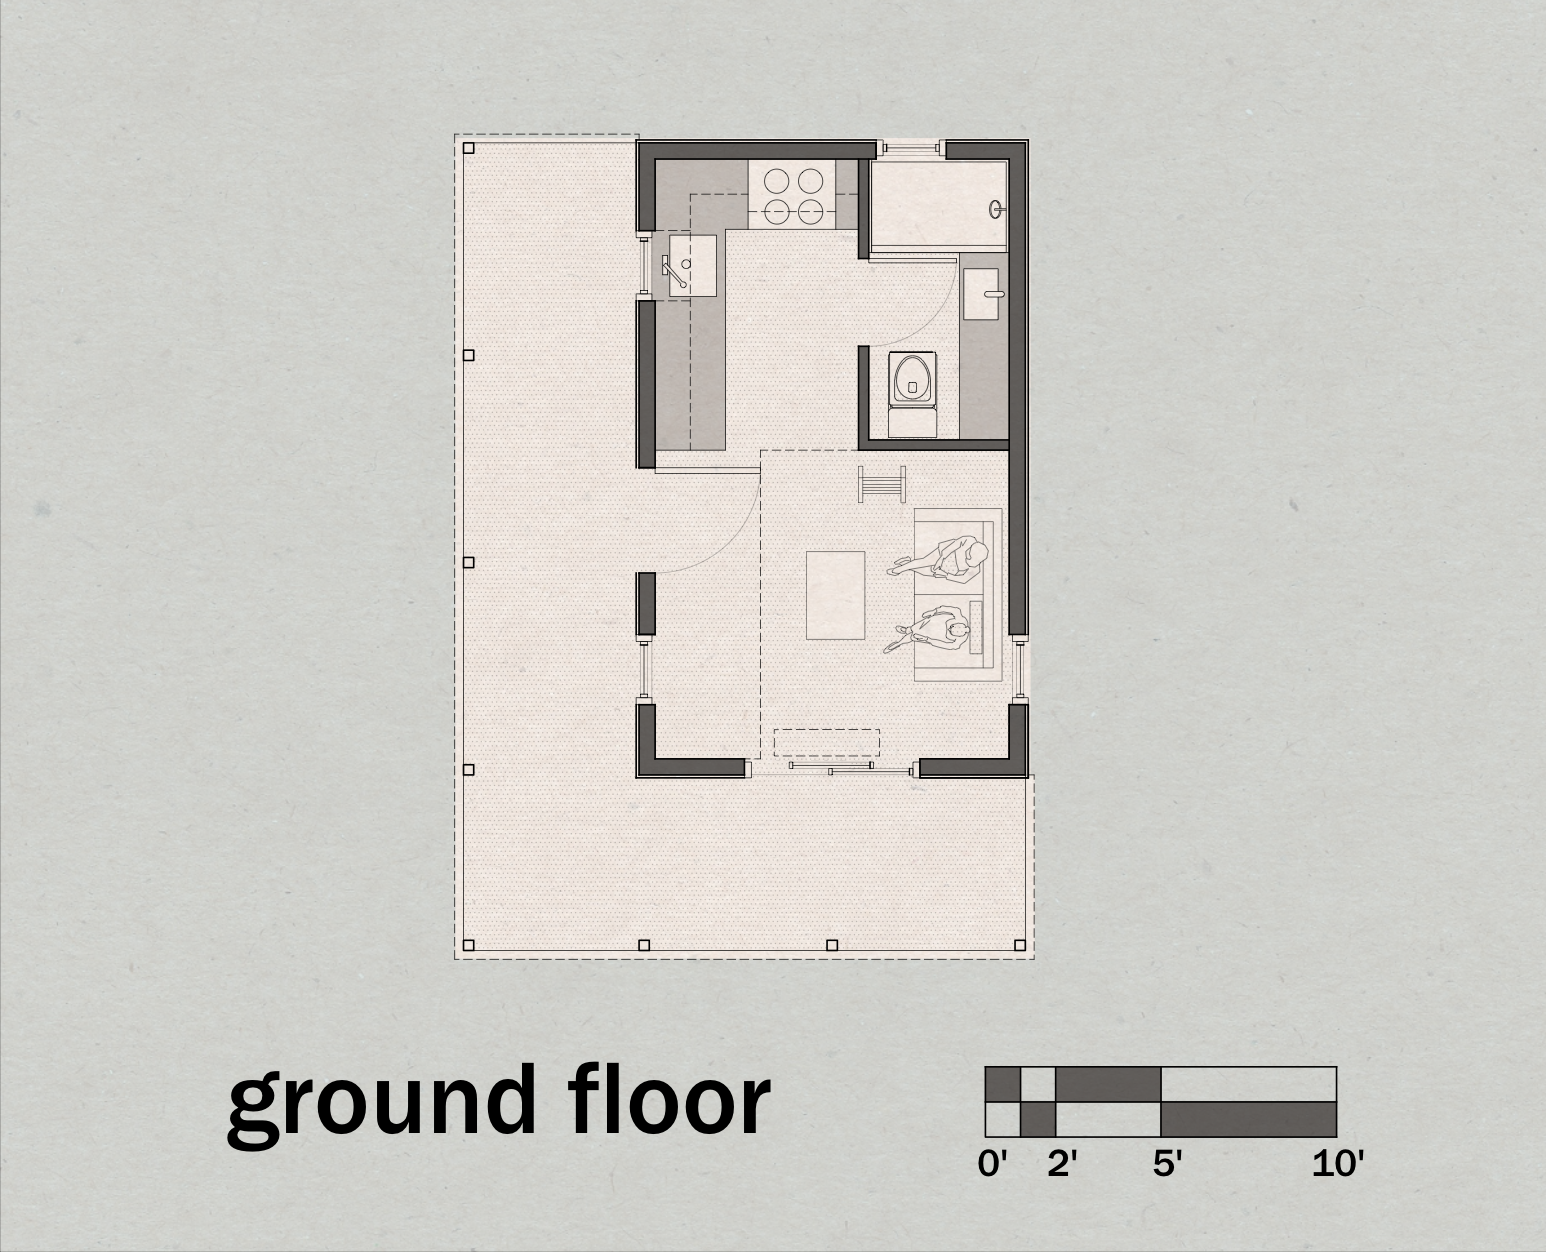 Ground Floor Plan For Dash Studio ADU Accessory Dwelling Unit or Tiny House